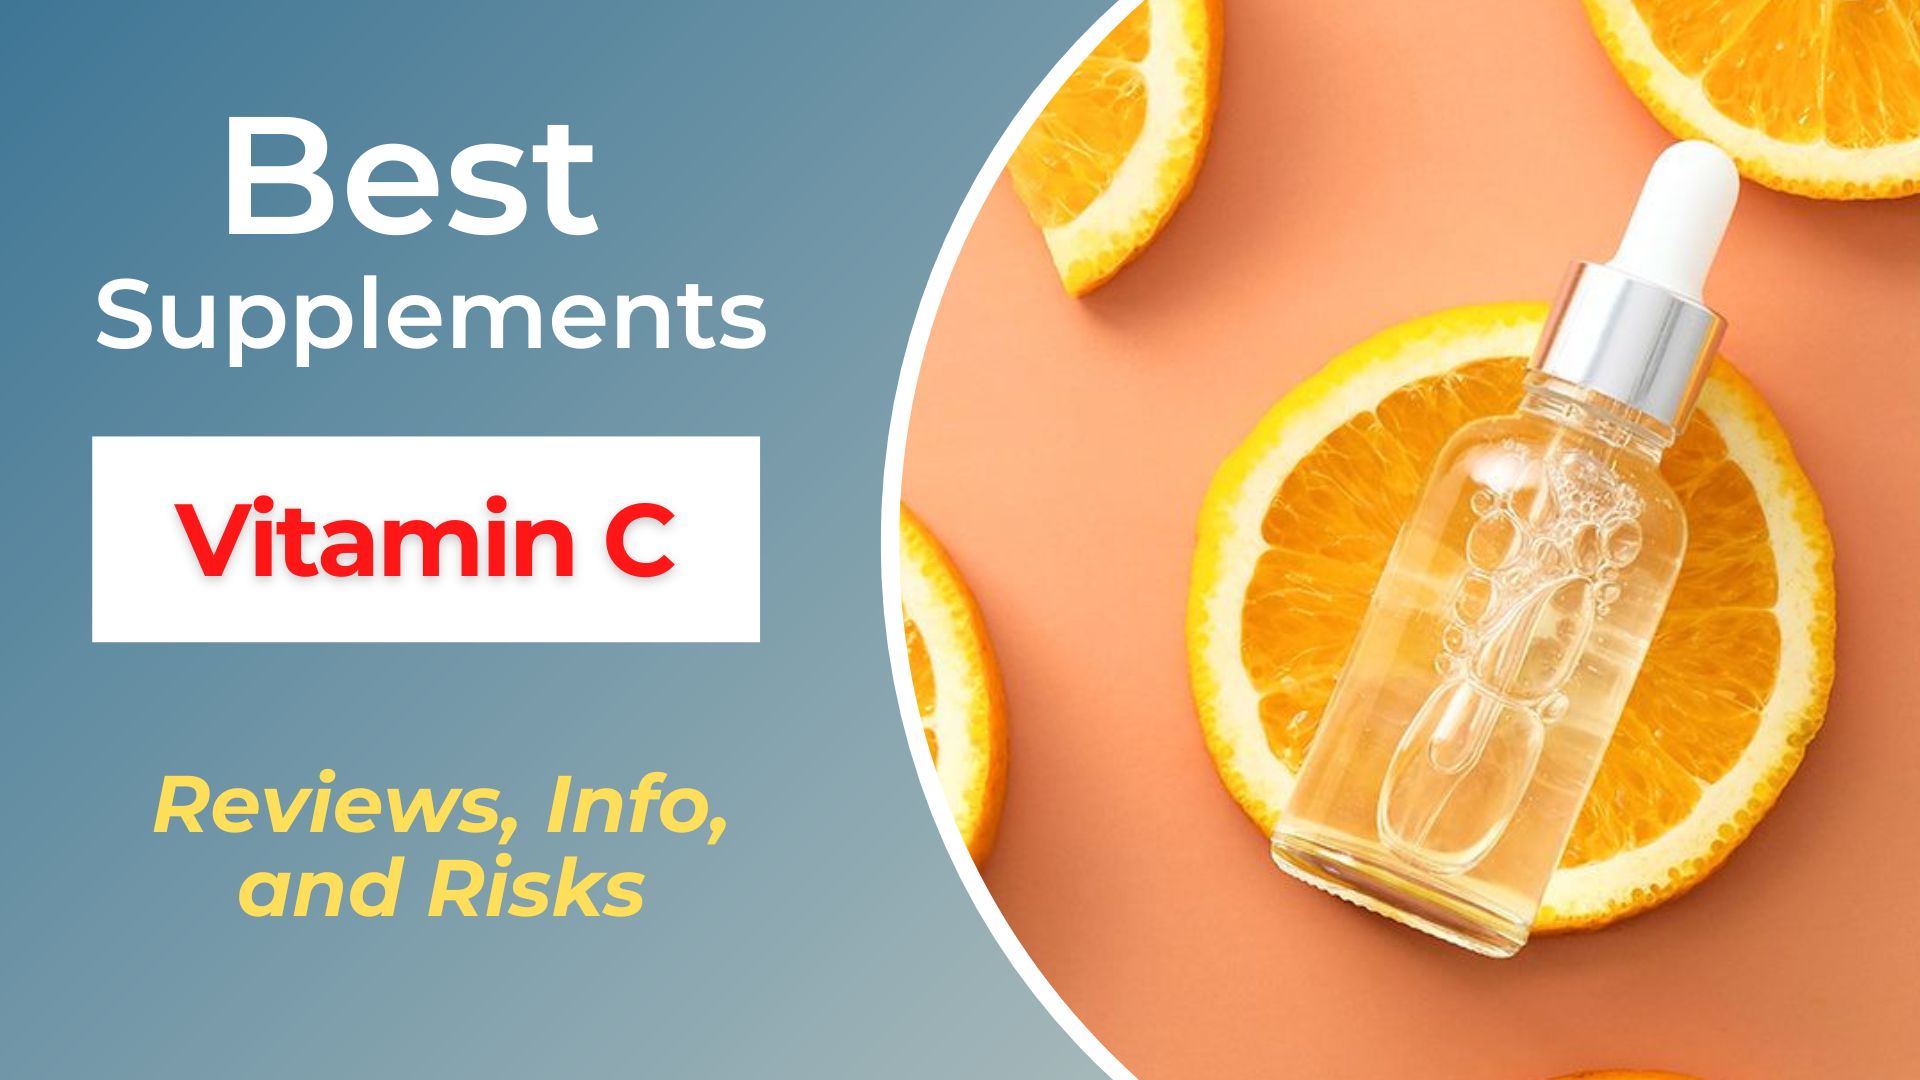 Best Supplements for Vitamin C